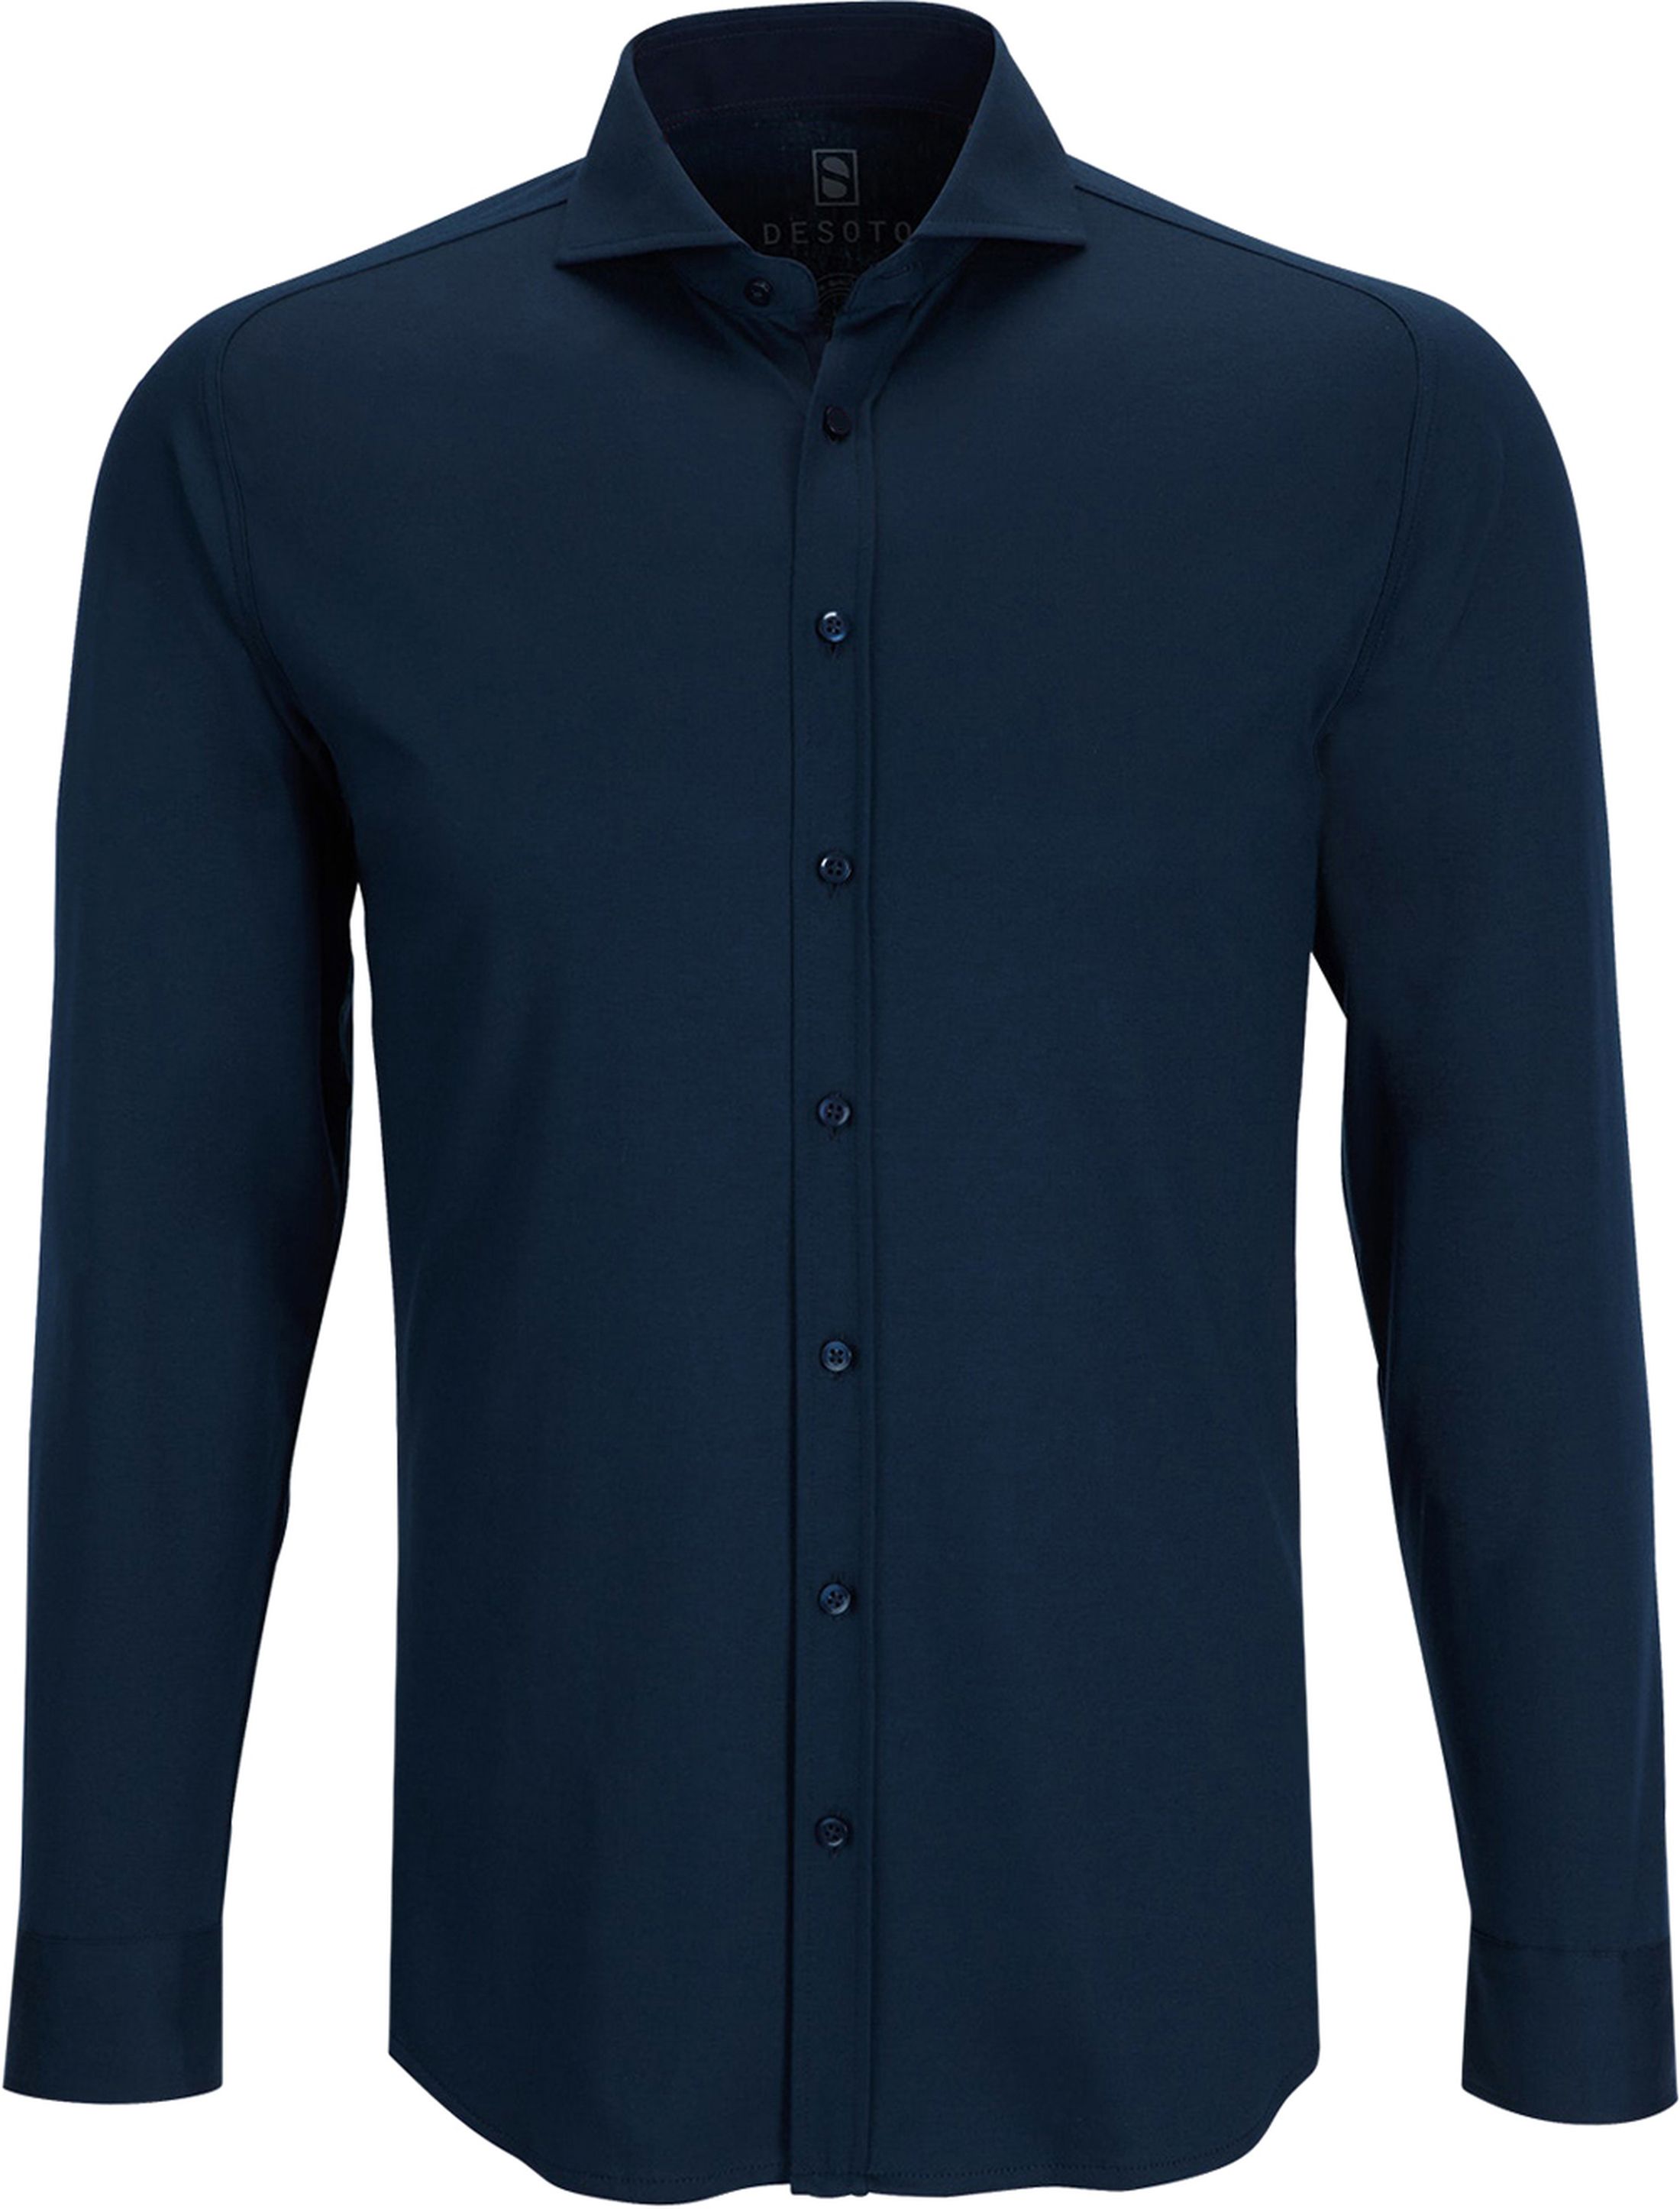 Desoto Shirt Non Iron Navy 057 Dark Blue Blue size 3XL